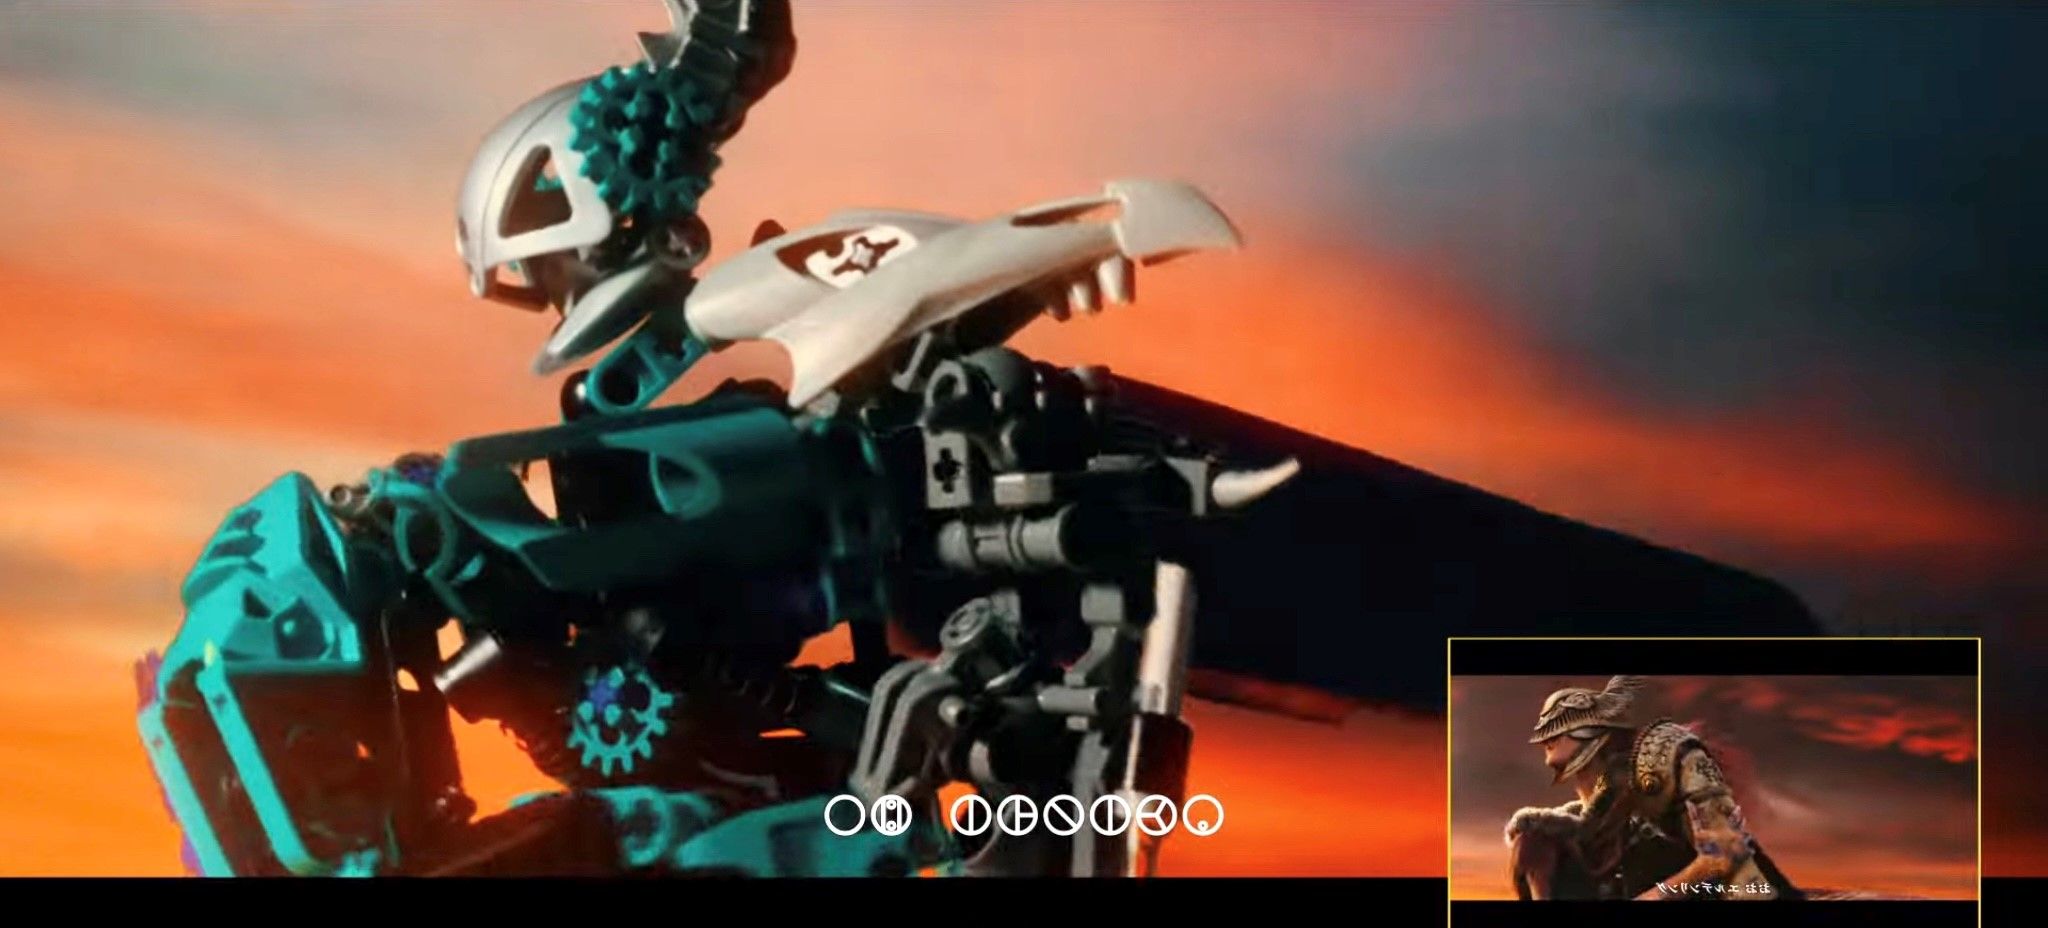 Elden Ring Fan Recreates Game Trailer Using Bionicle